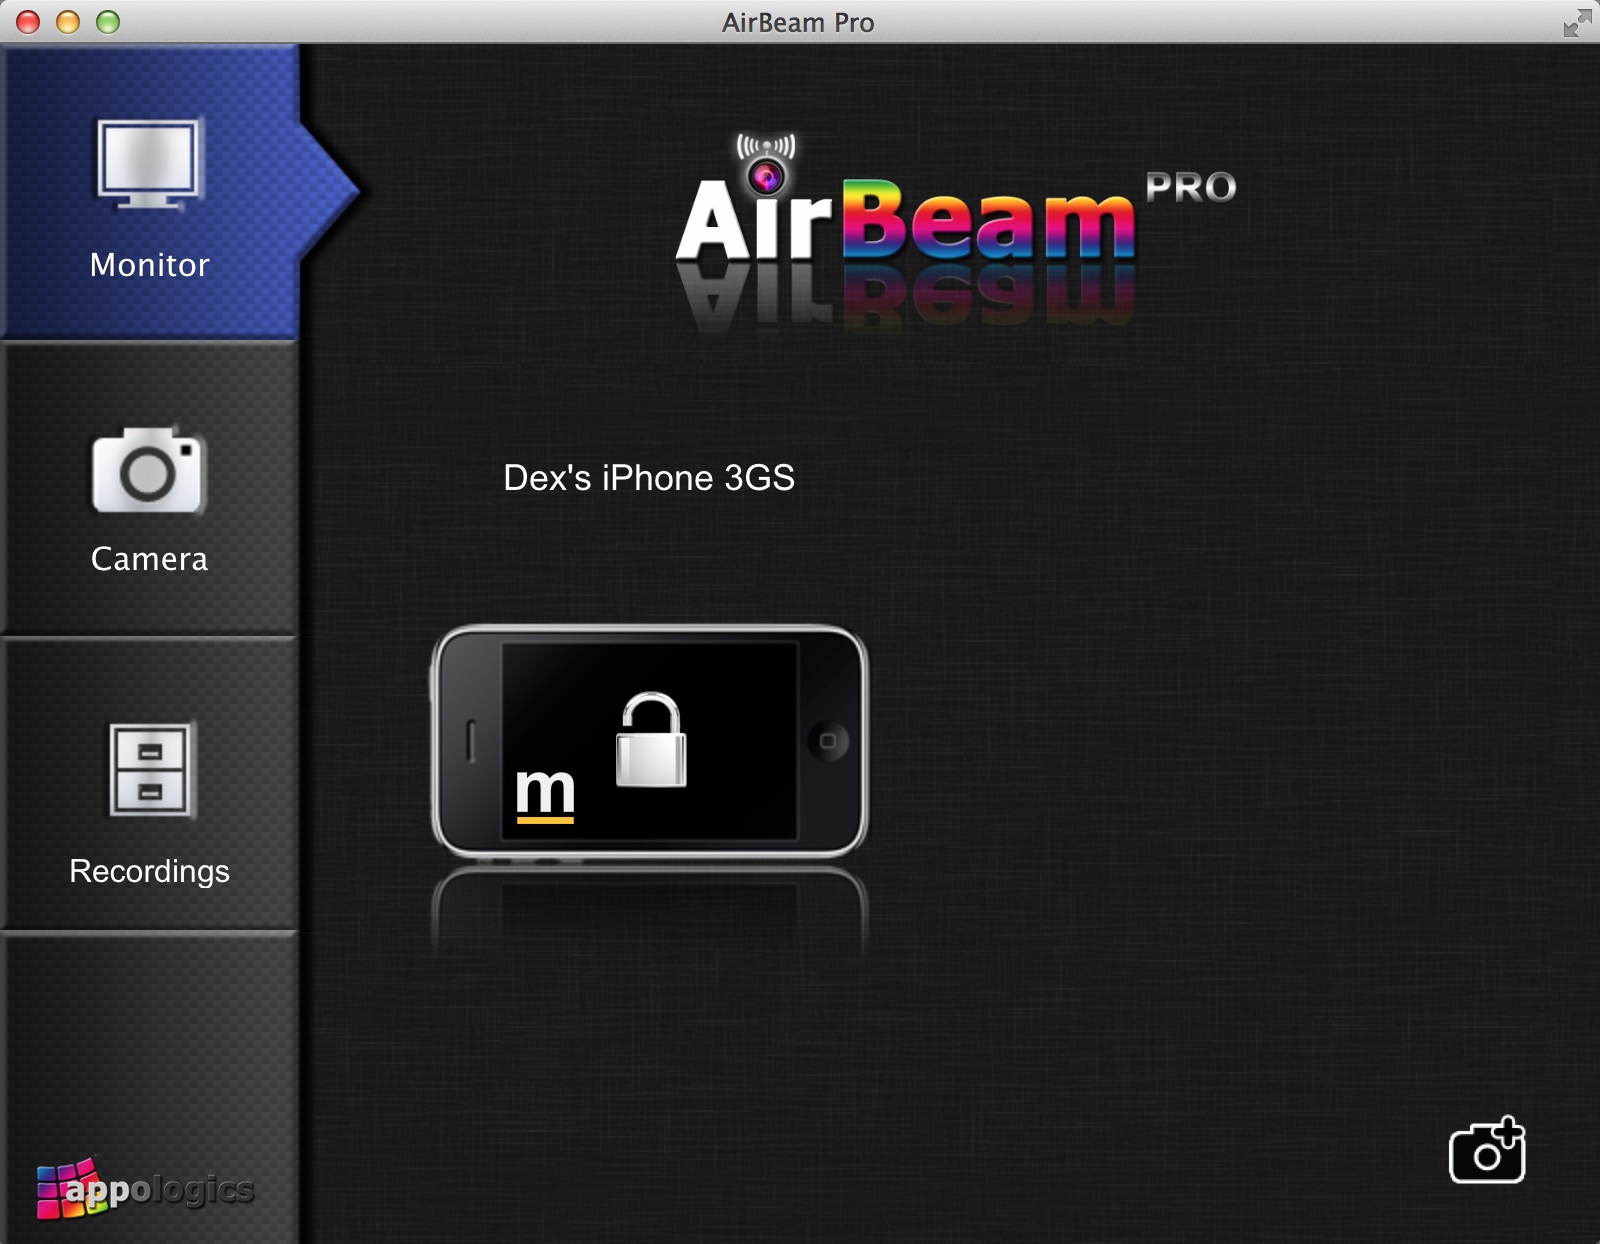 http://thedigitalstory.com/2013/08/26/airbeam-security.jpg